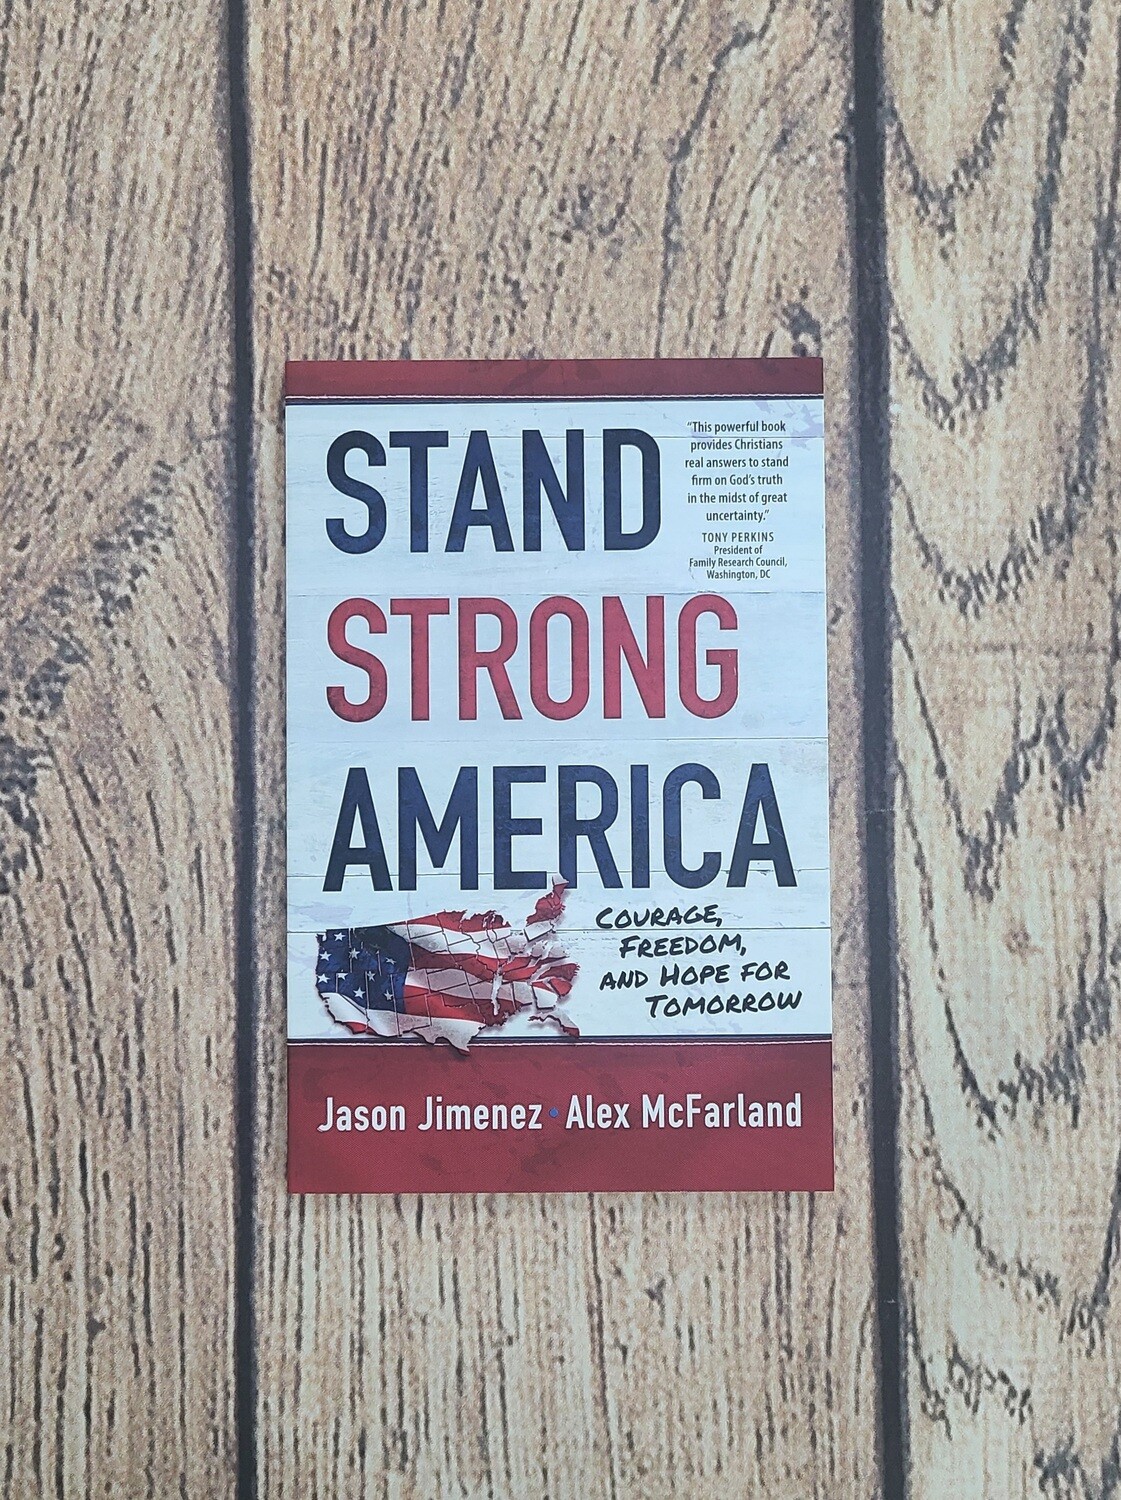 Stand Strong America by Jason Jimenez and Alex McFarland